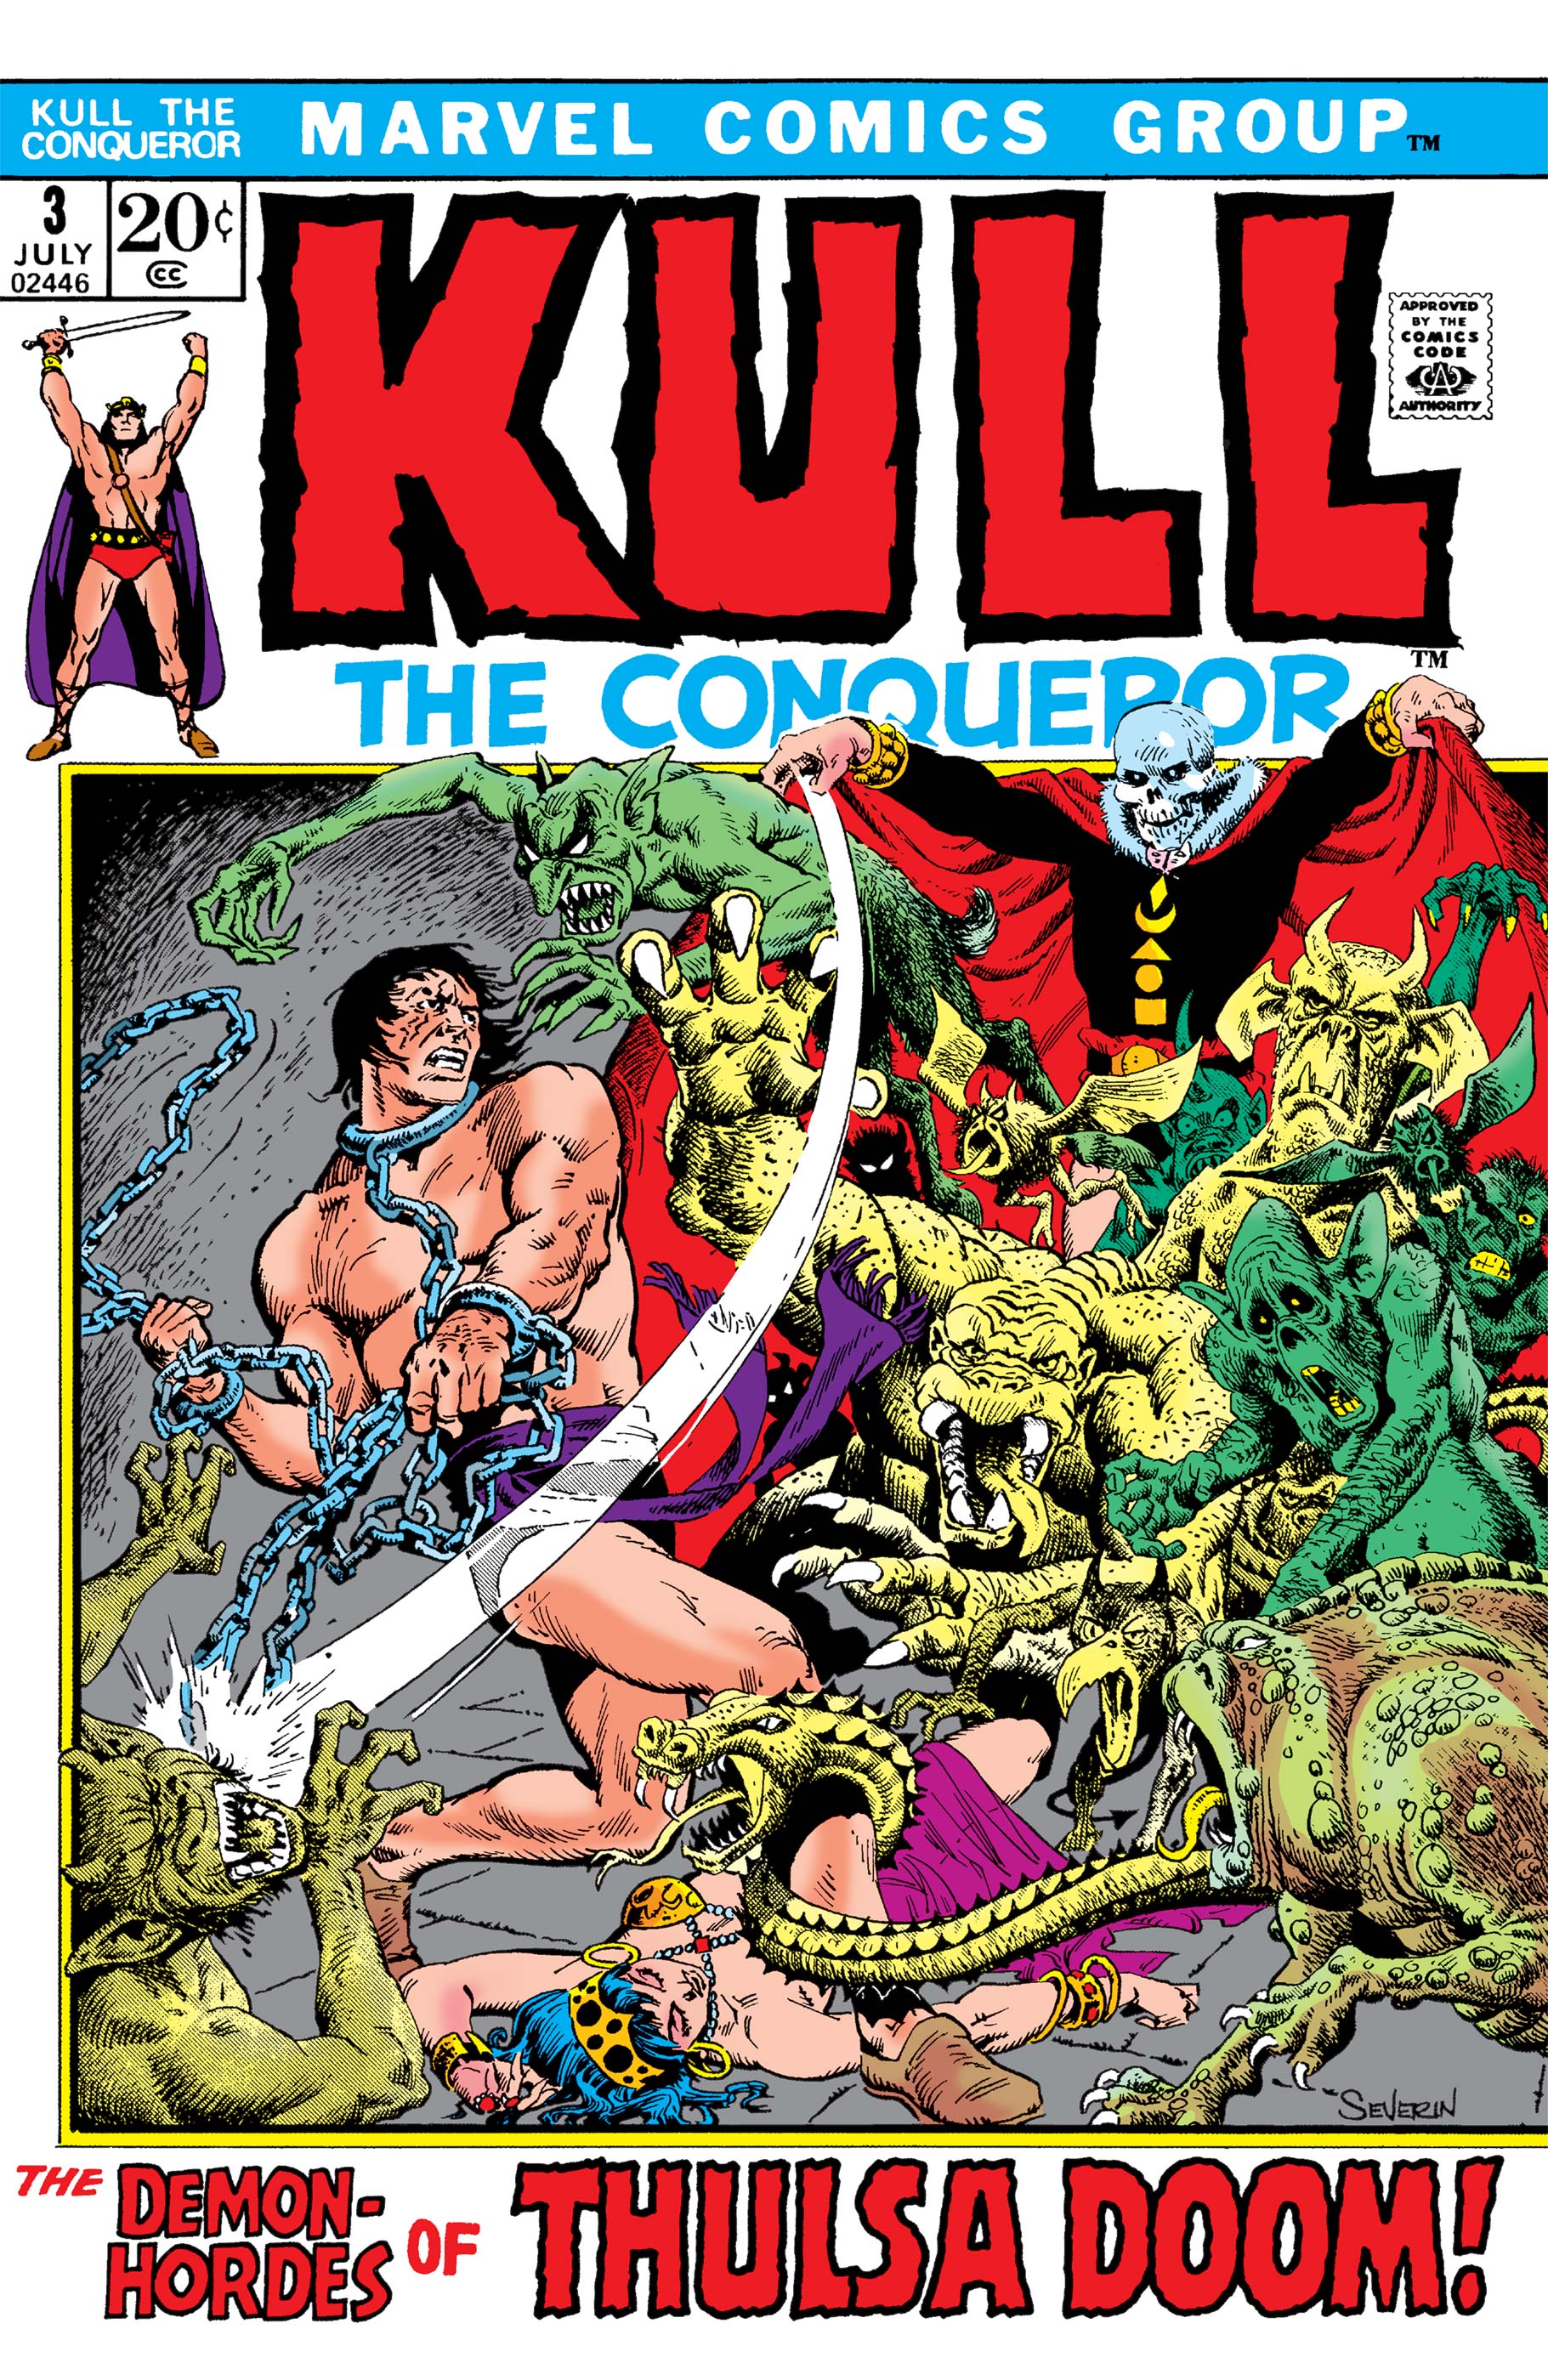 Kull the Conqueror (1971) #3